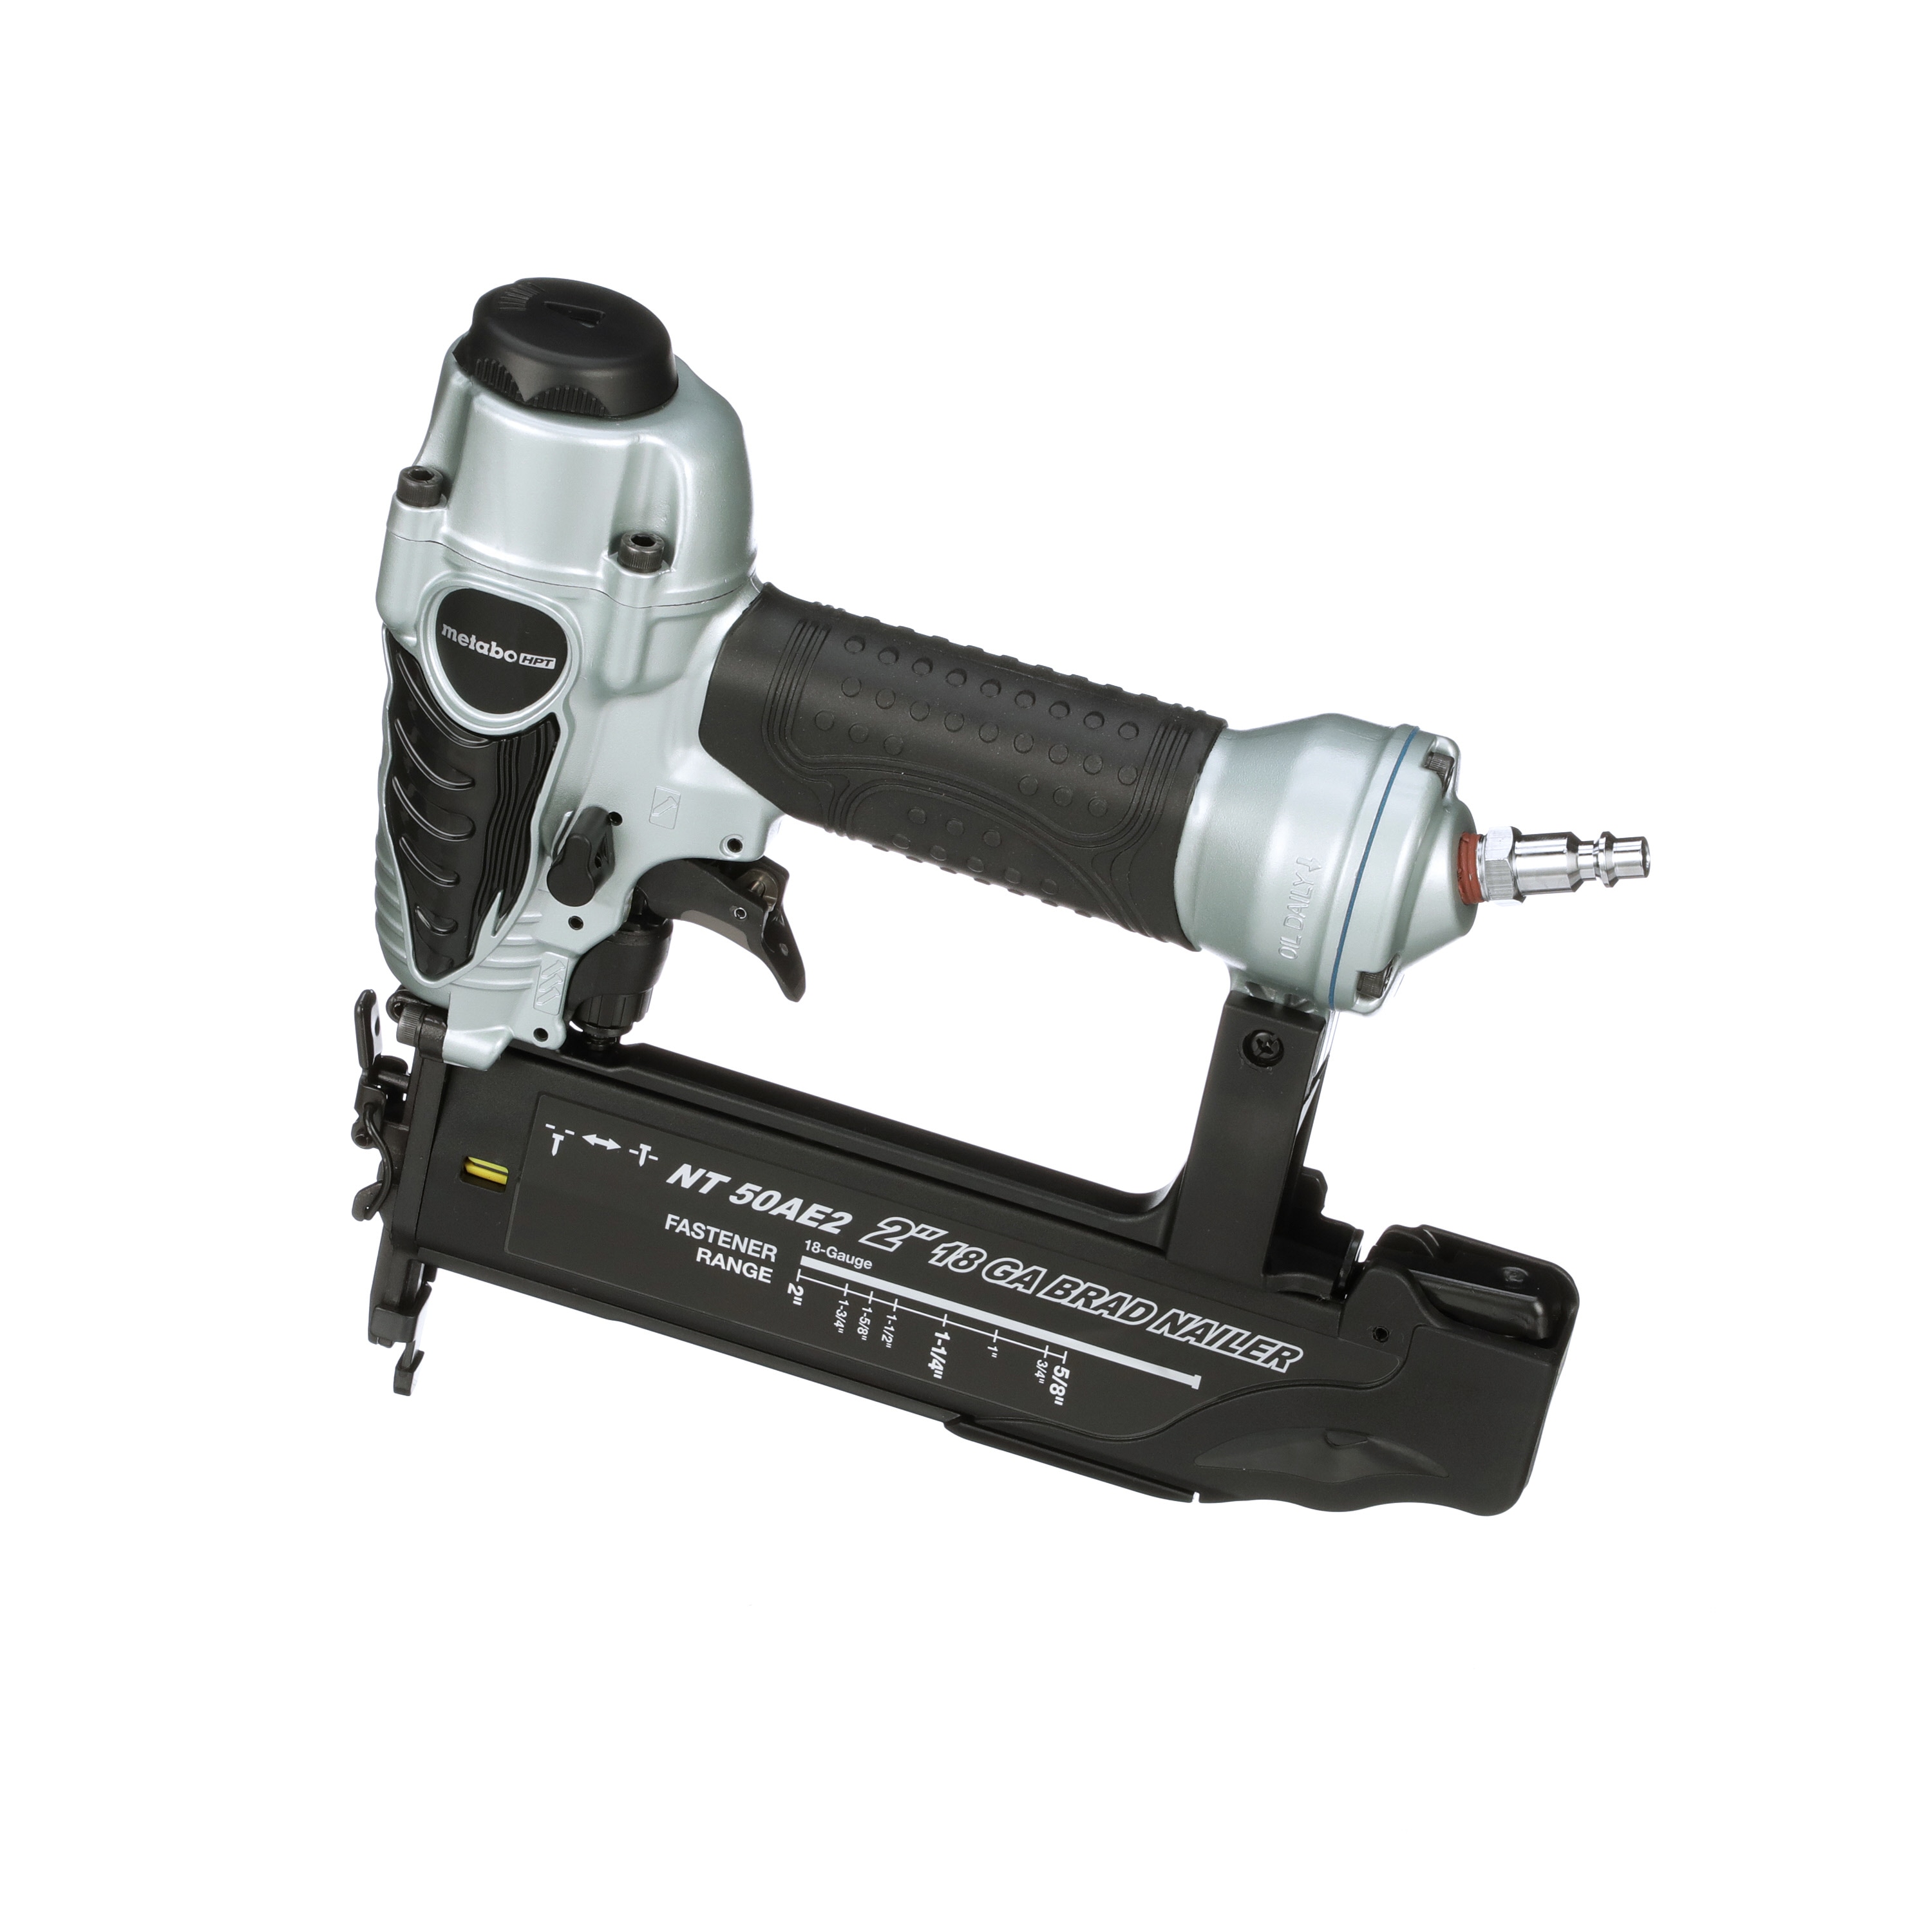 metabo HPT NT50AE2 18 Gauge Brad Nail Gun for sale online 